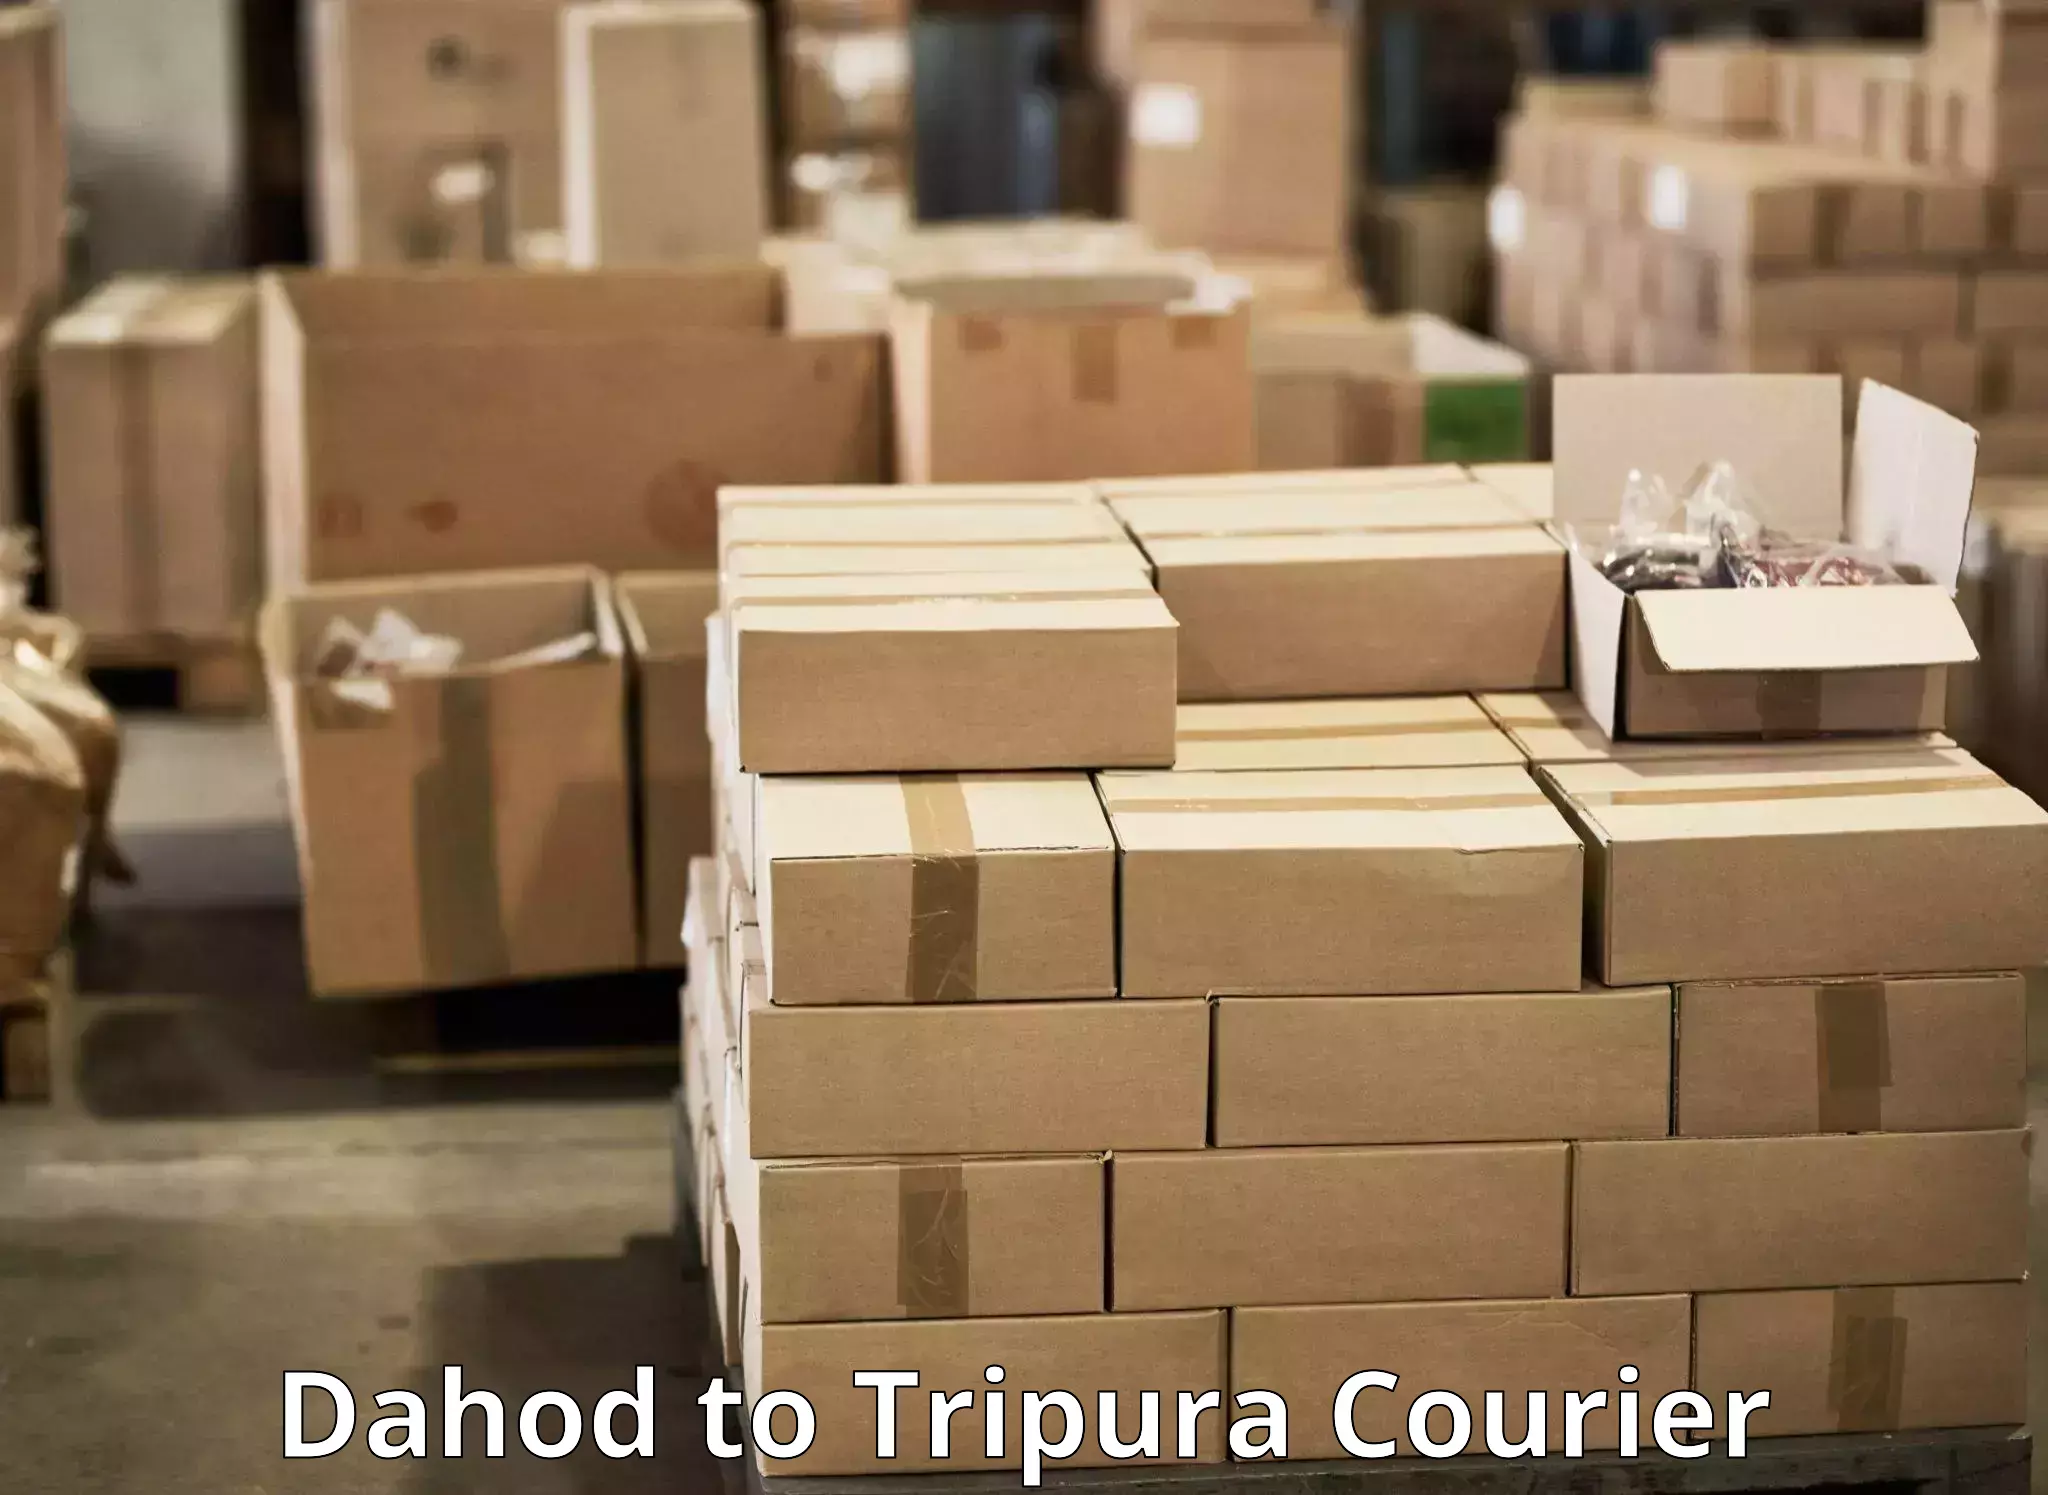 High-speed parcel service Dahod to Dharmanagar